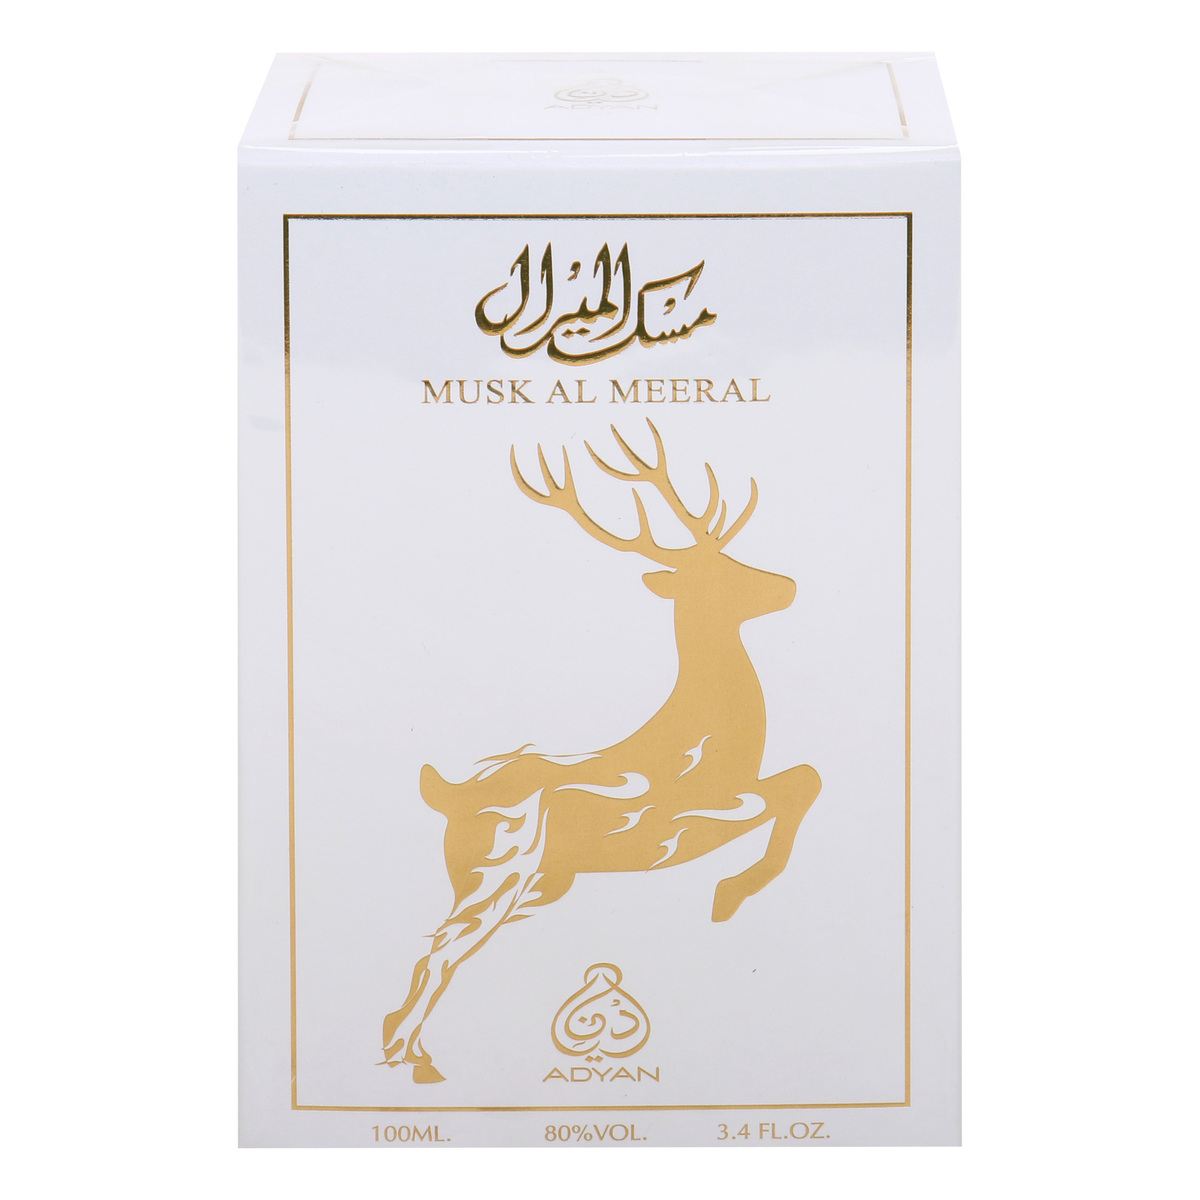 Adyan Musk Al Meeral EDP for Men and Women 100 ml